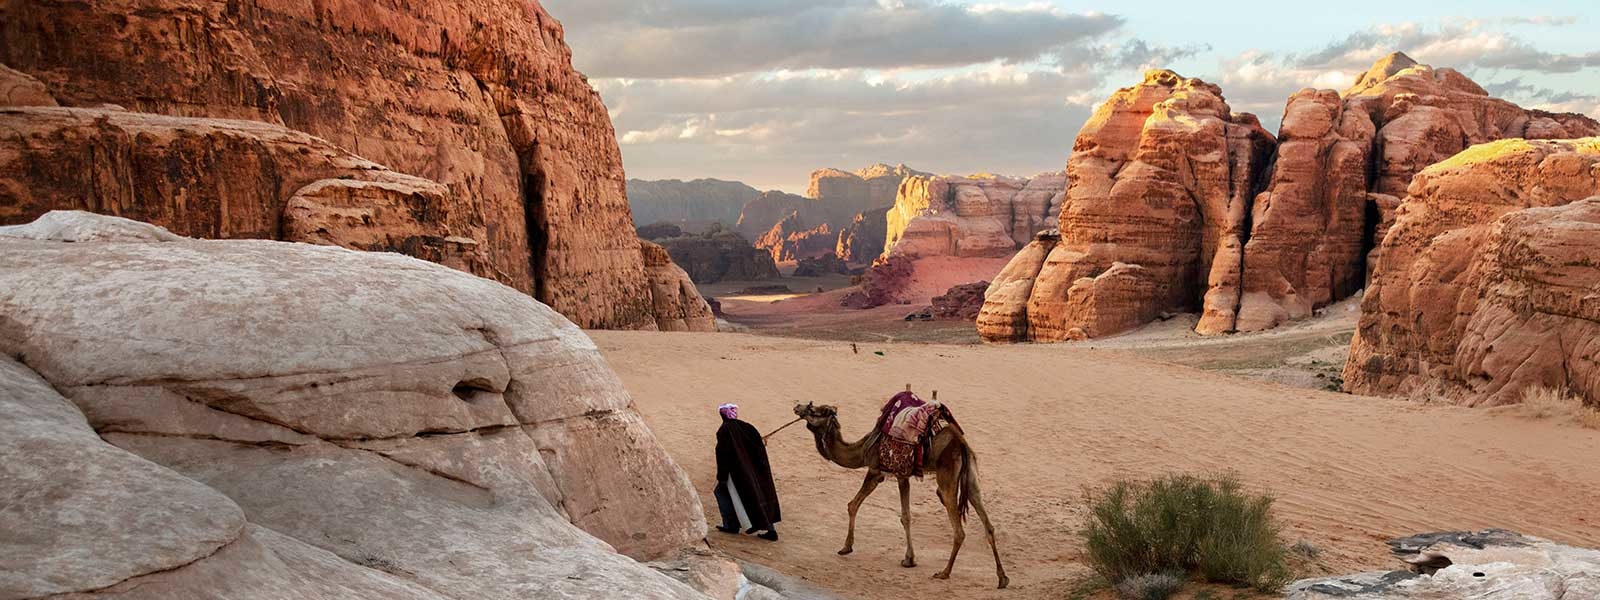 Man walking camel in desert